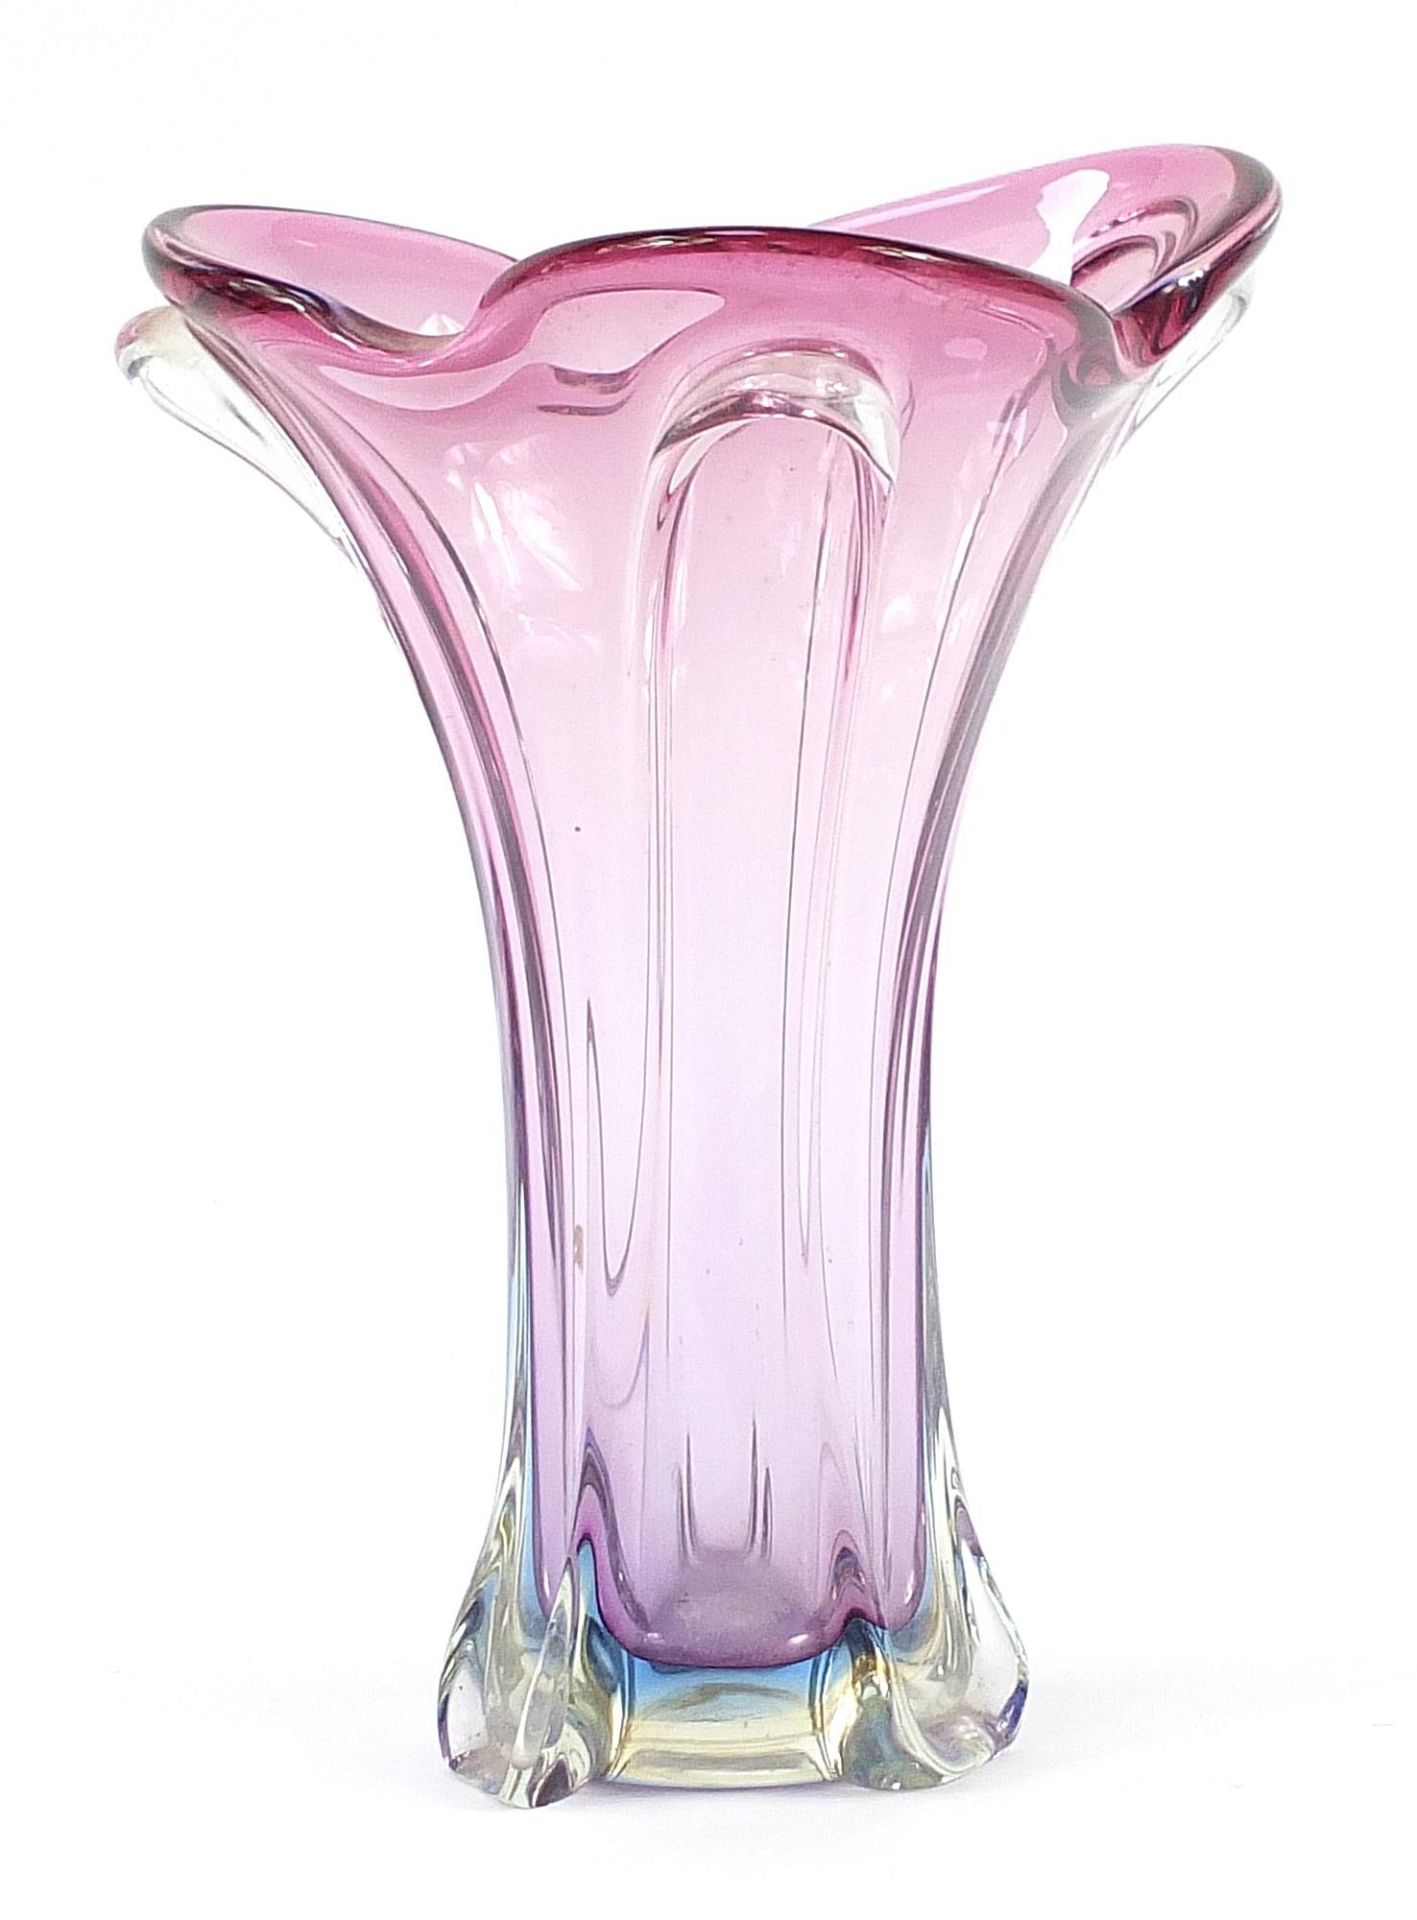 Large amethyst art glass vase, 34cm high - Image 2 of 3